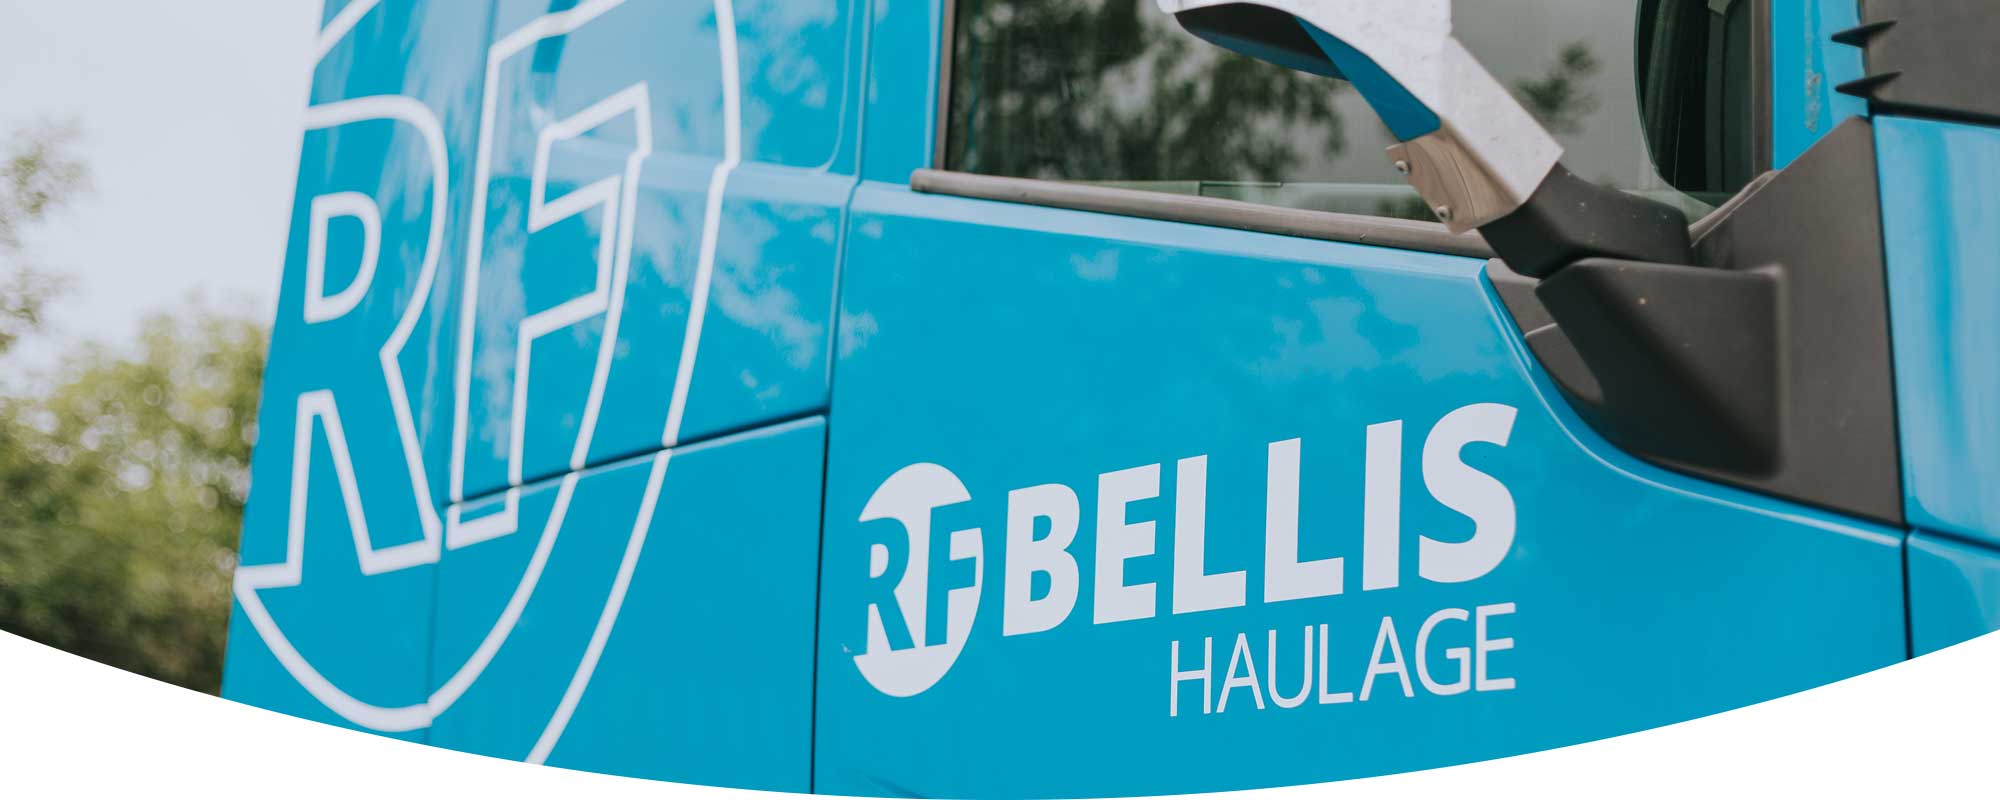 R.F. Bellis Haulage Limited